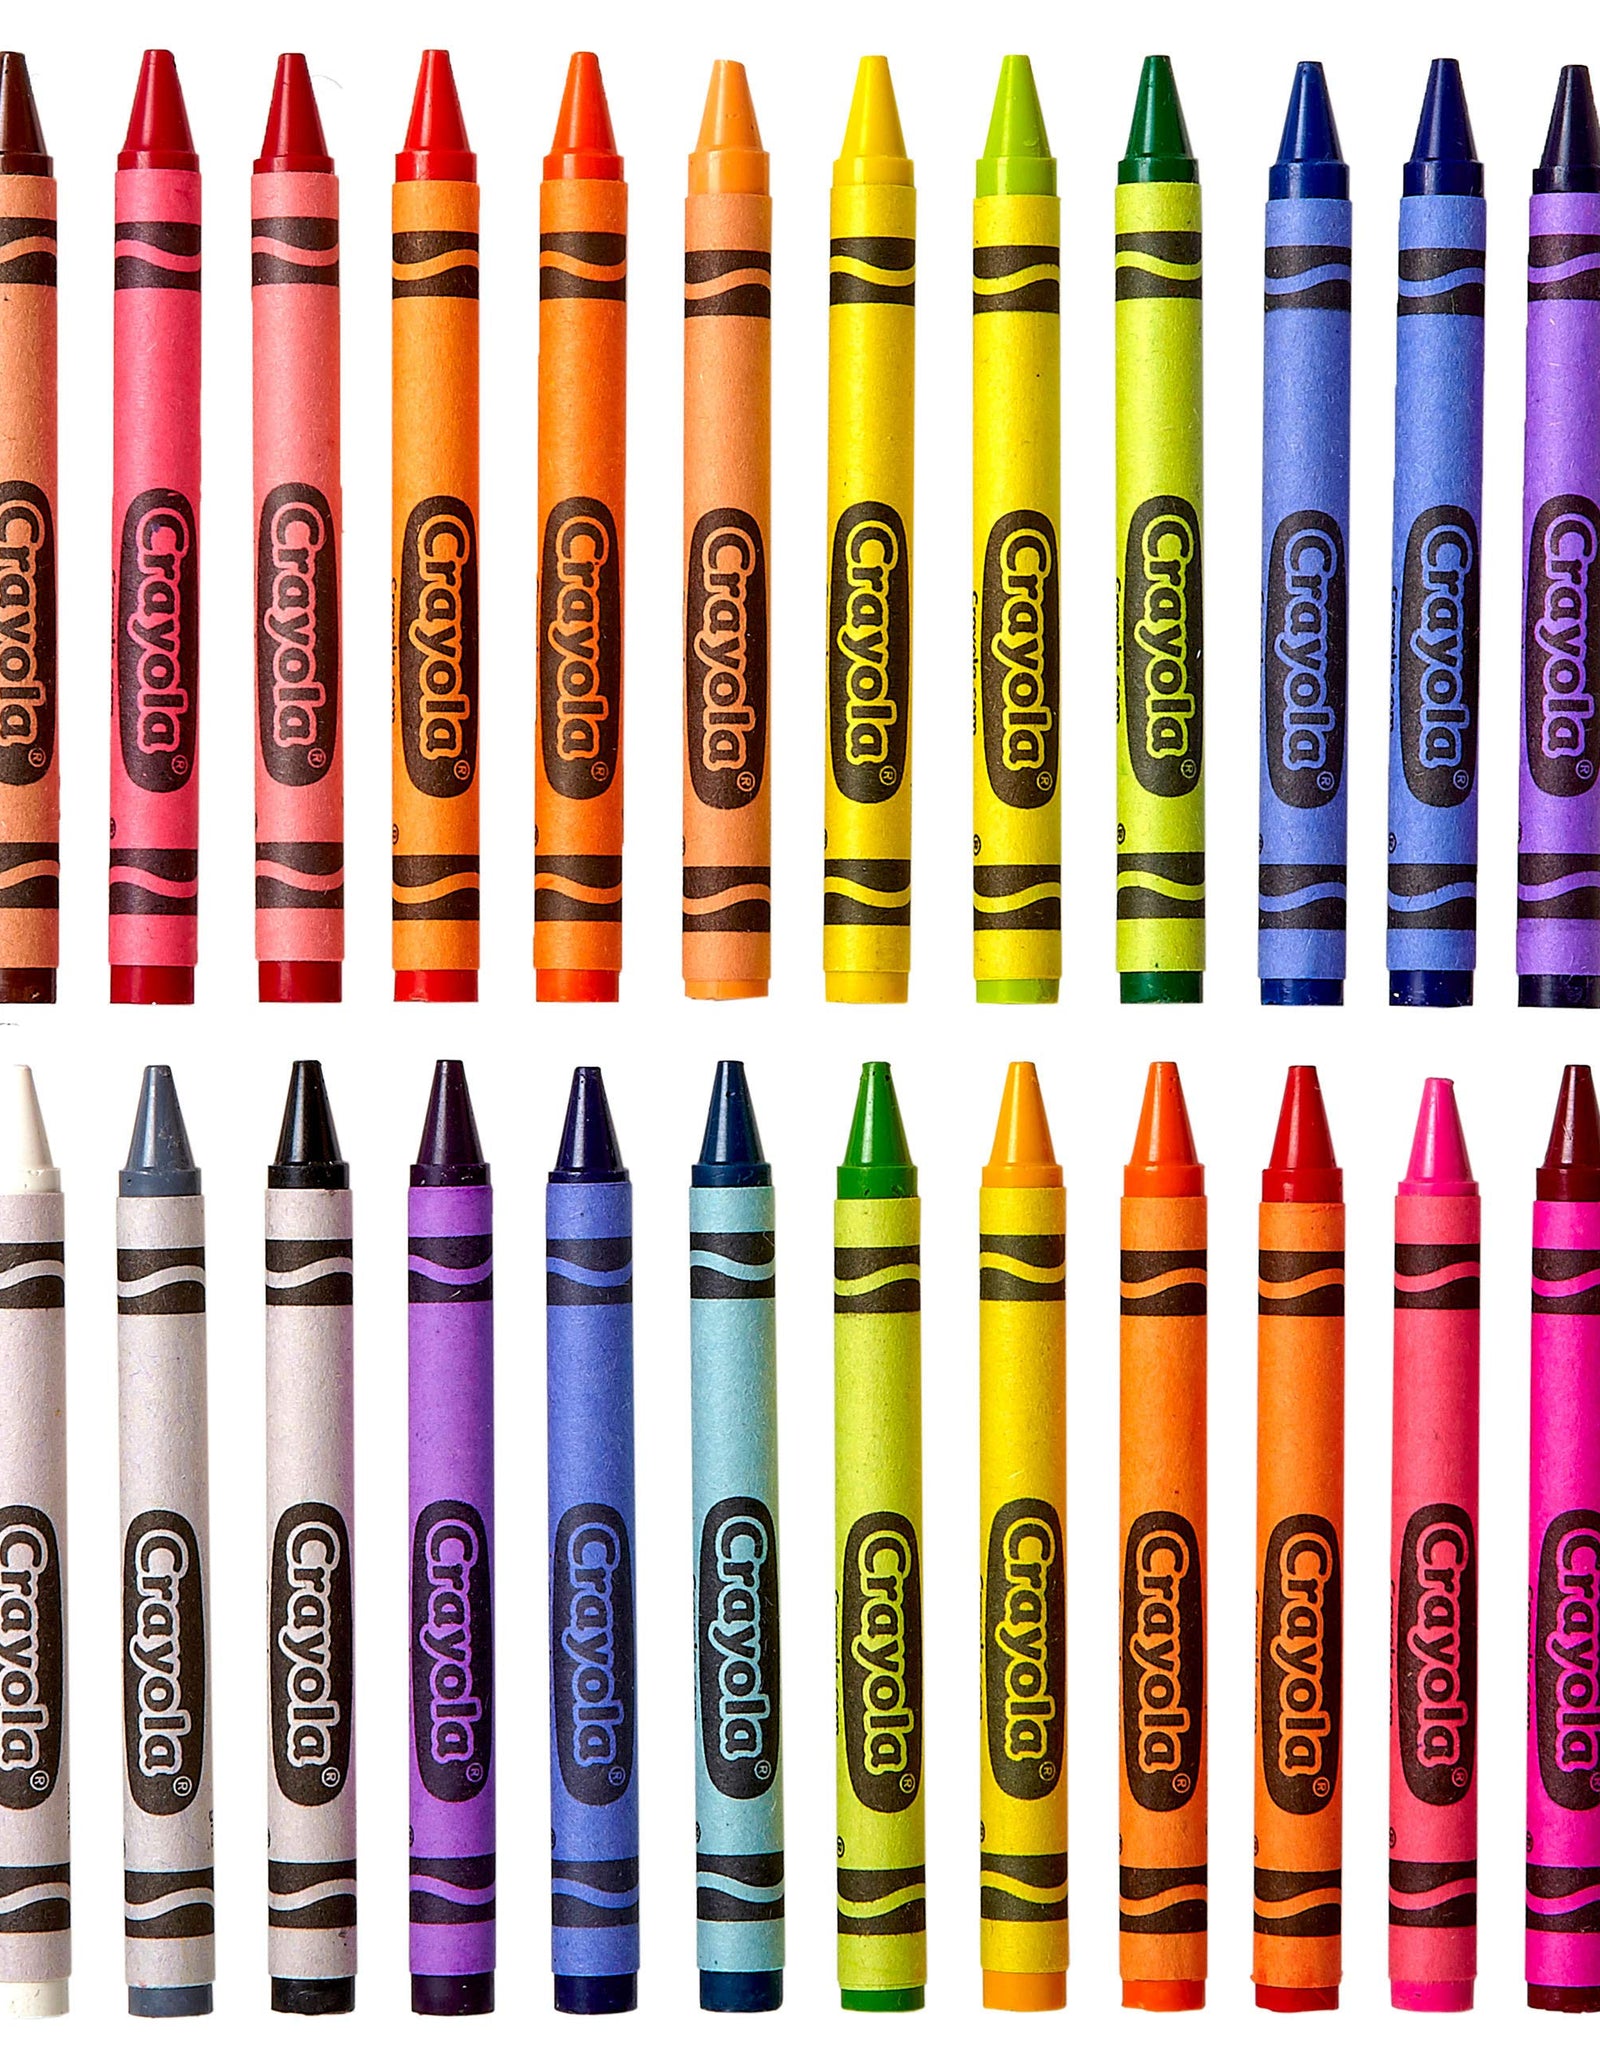 Crayola Crayons Bulk, Classroom Supplies for Teachers, 24 Crayon Packs with 24 Assorted Colors